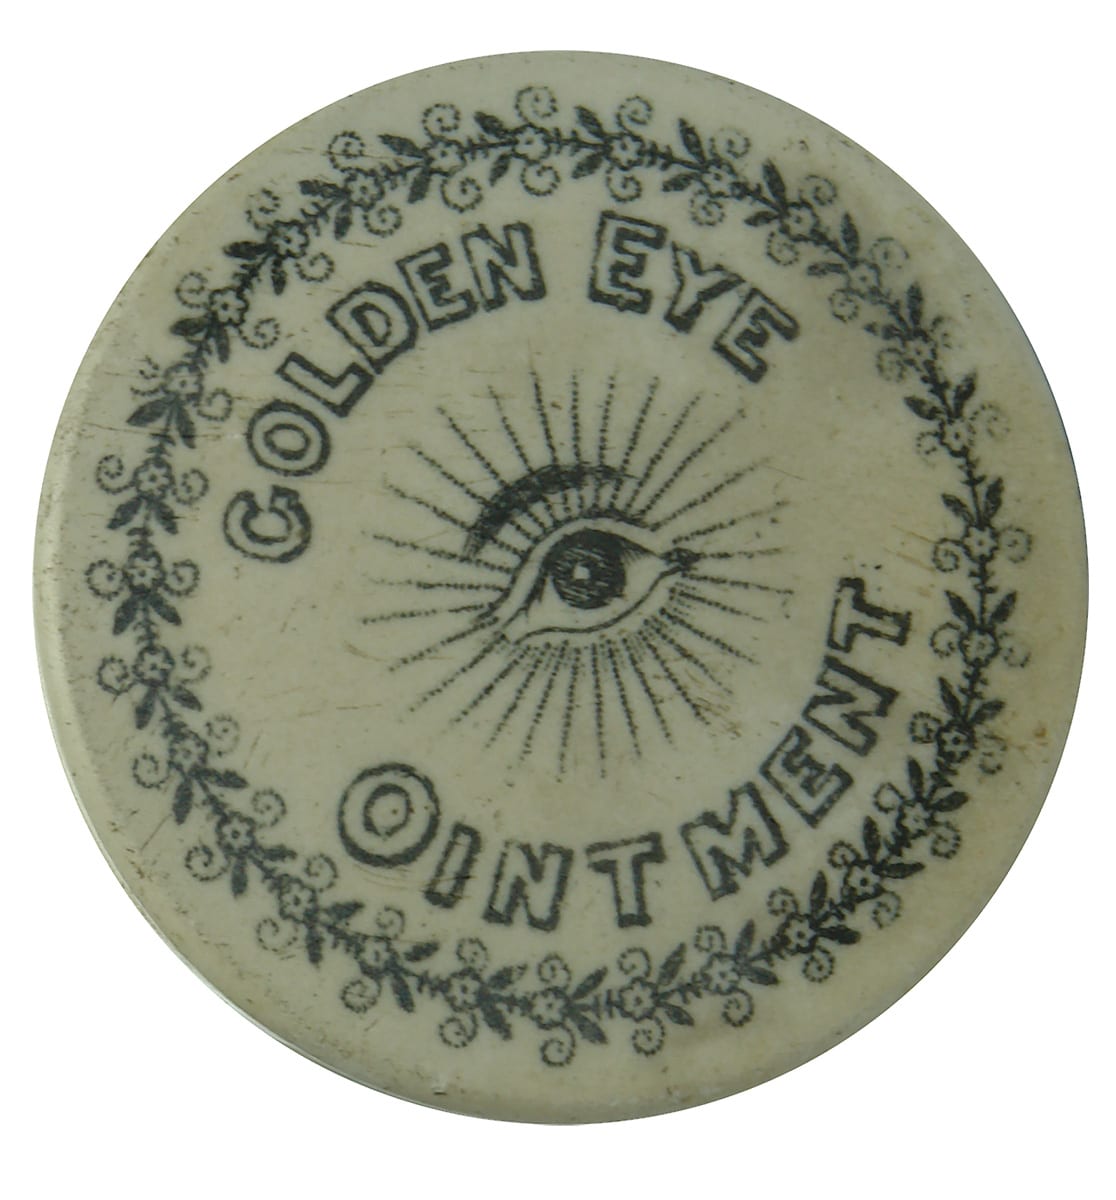 Golden Eye Ointment Antique Pot Lid